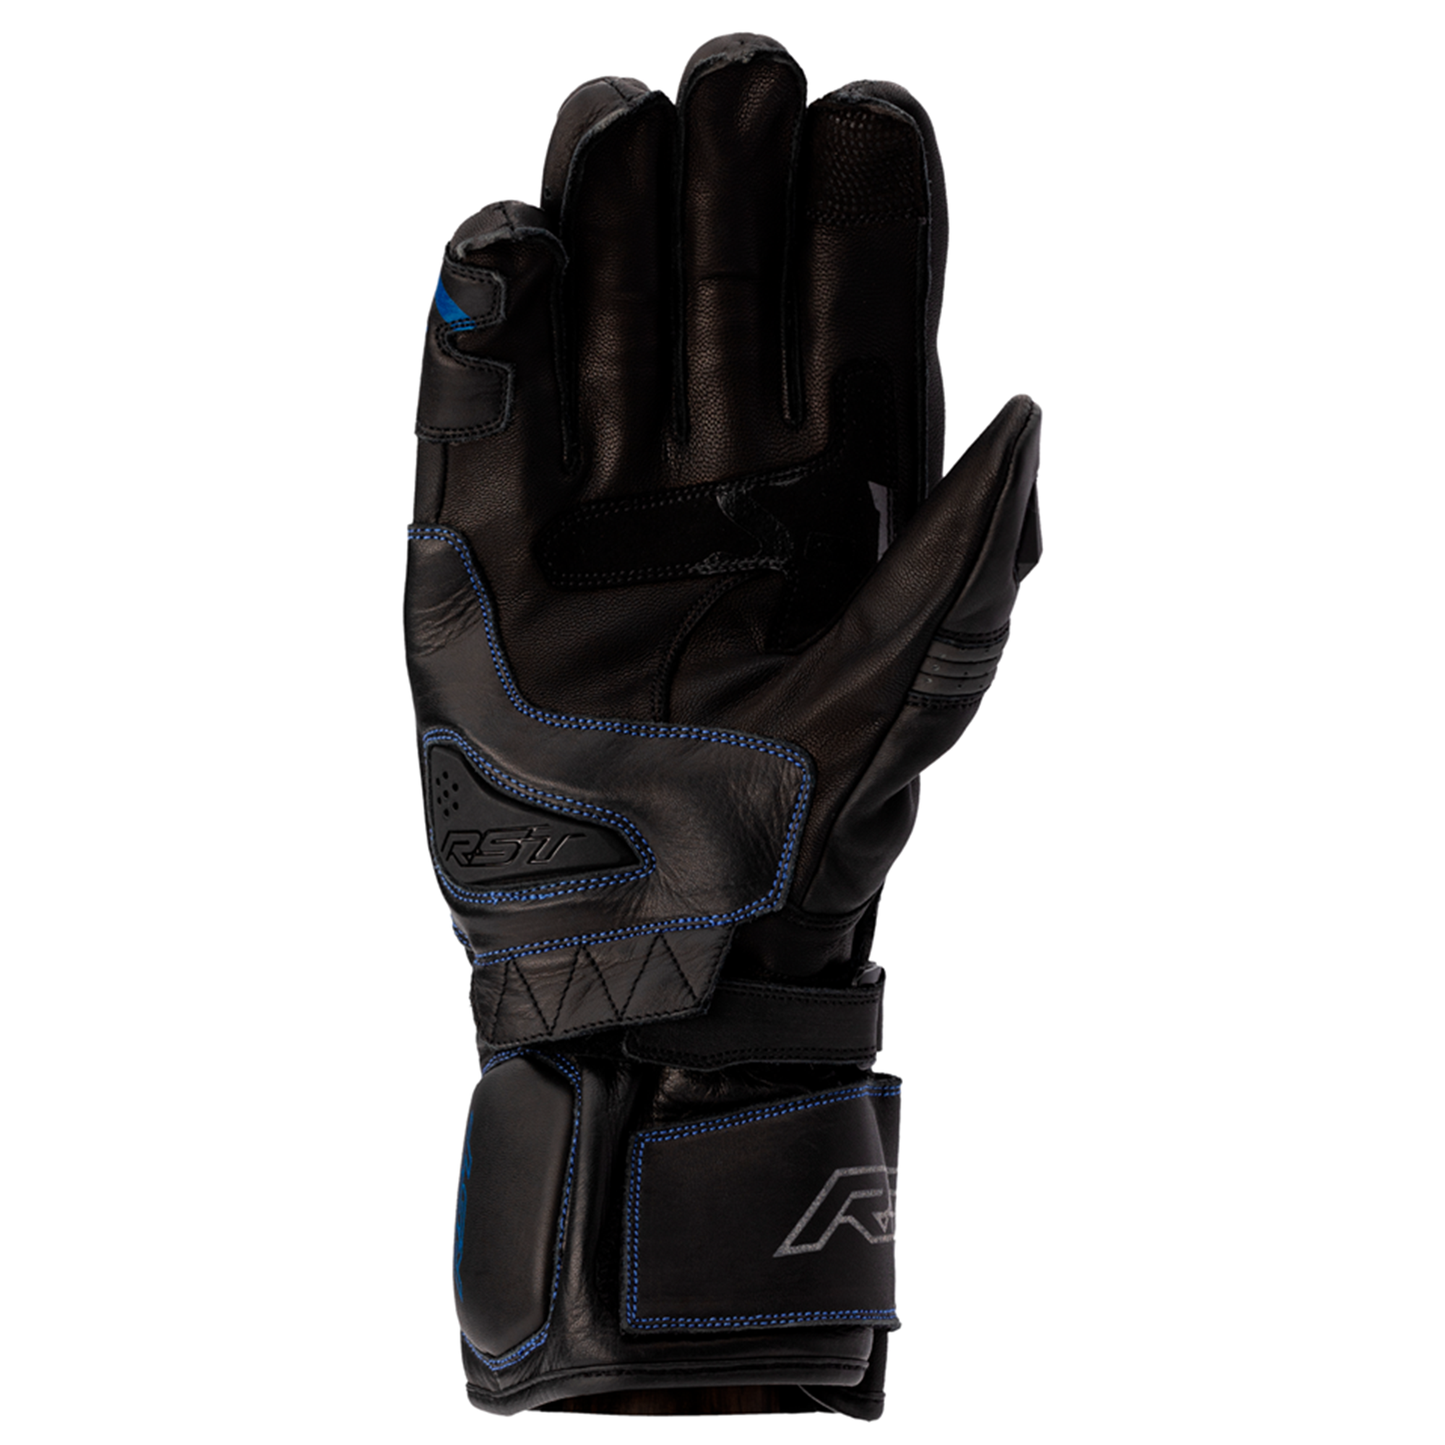 RST S1 CE Men's Gloves - Black/Grey/Neon Blue (3033)